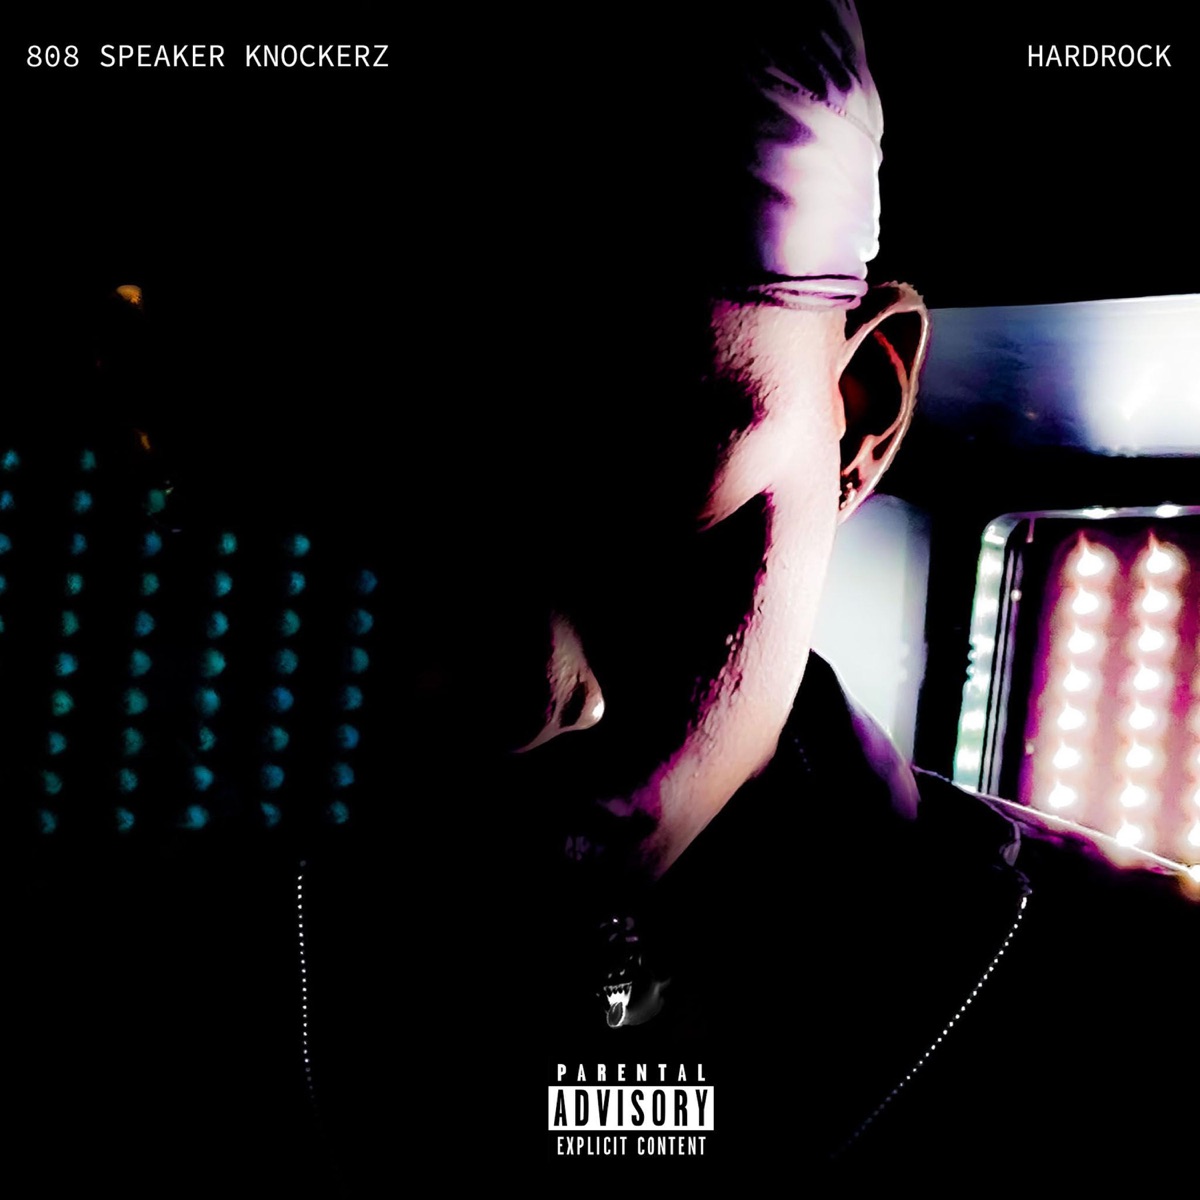 808 Speaker Knockerz - Album by Hardrock - Apple Music